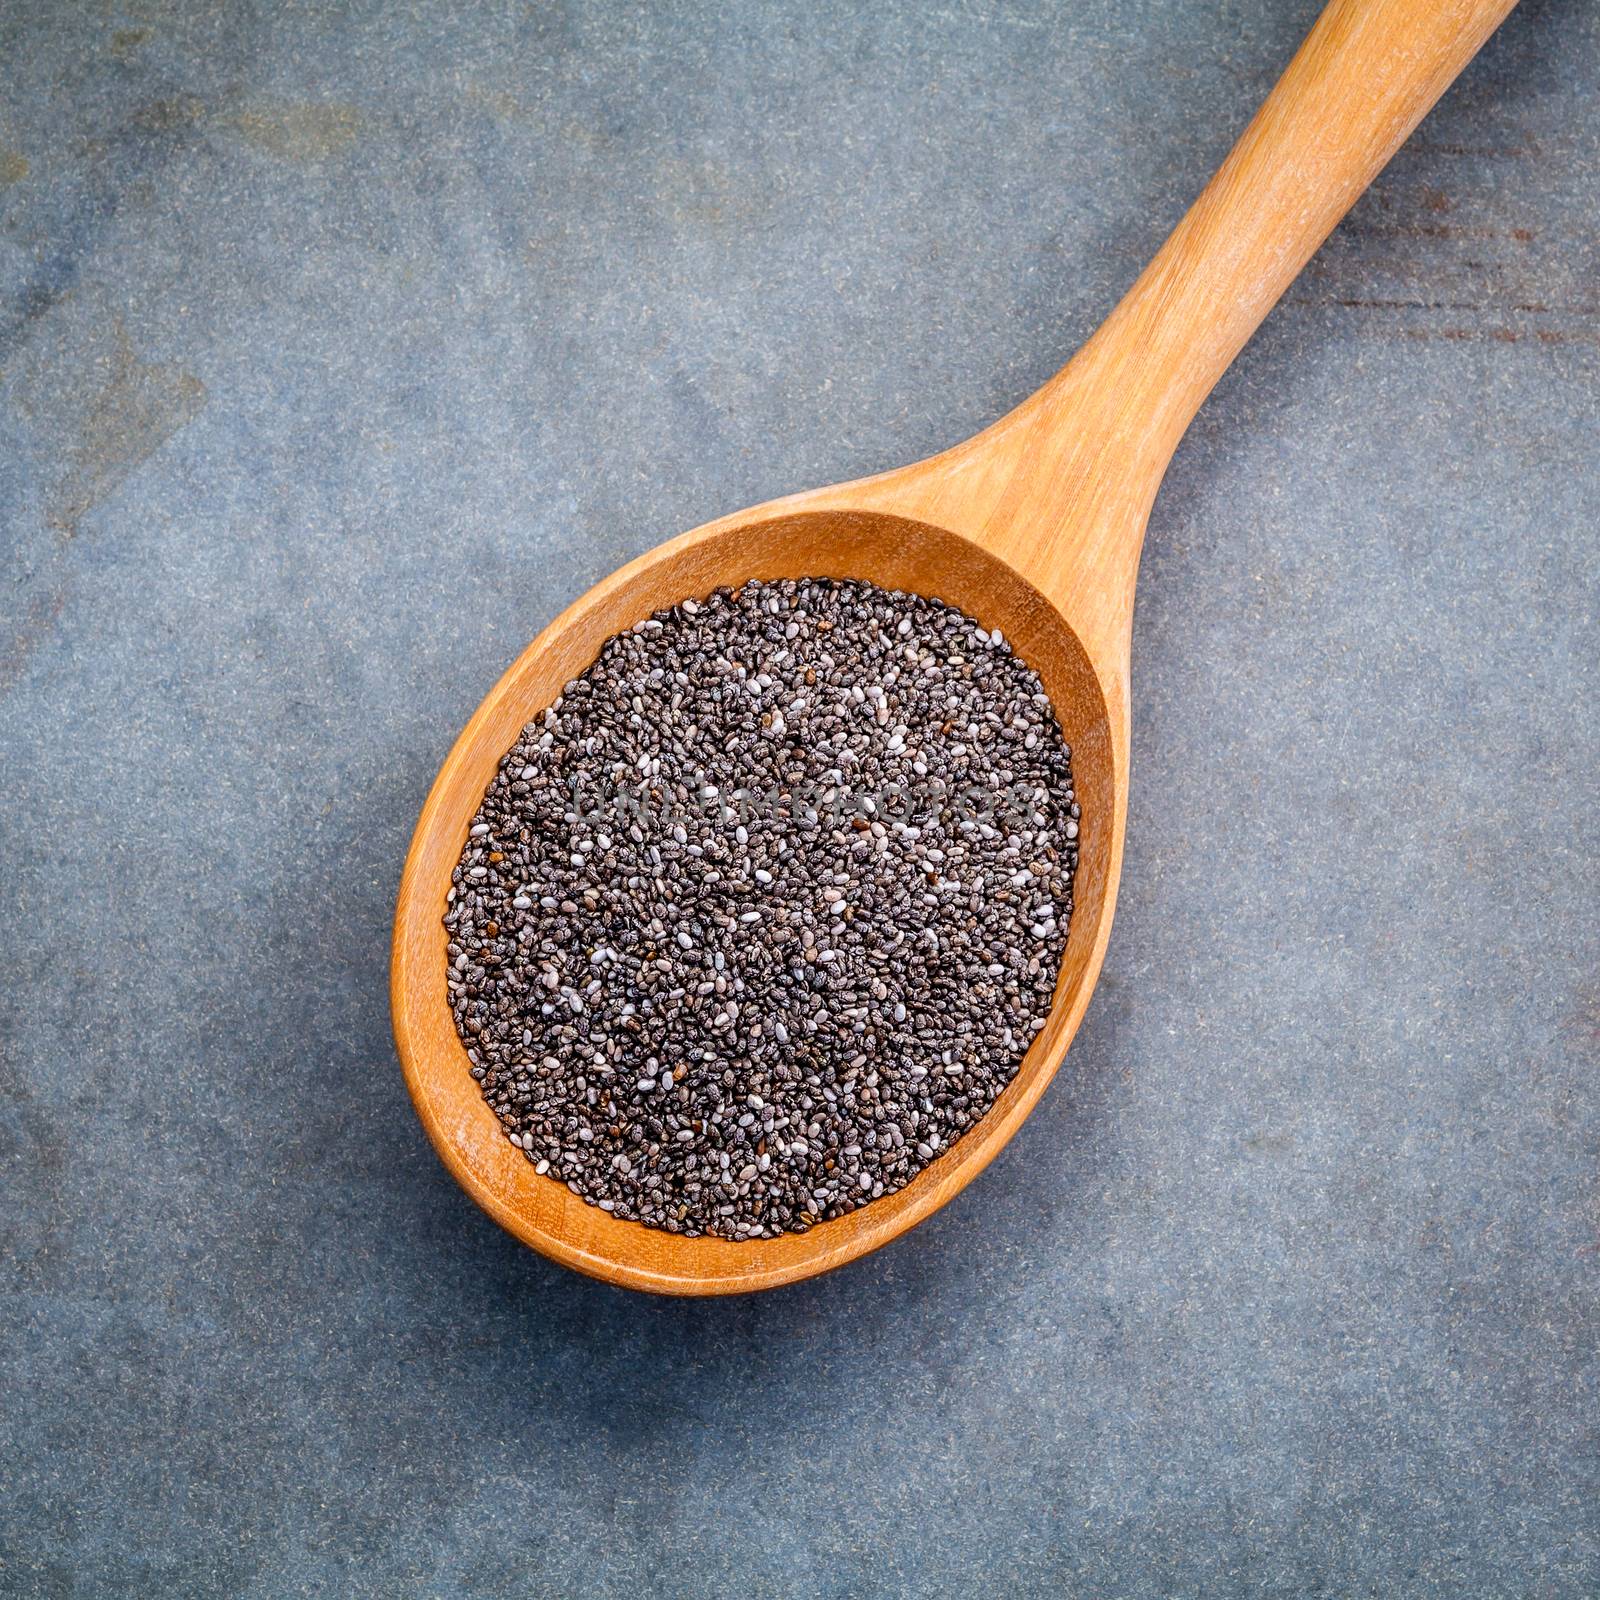 Nutritious chia seeds in wooden spoon for diet food ingredients.